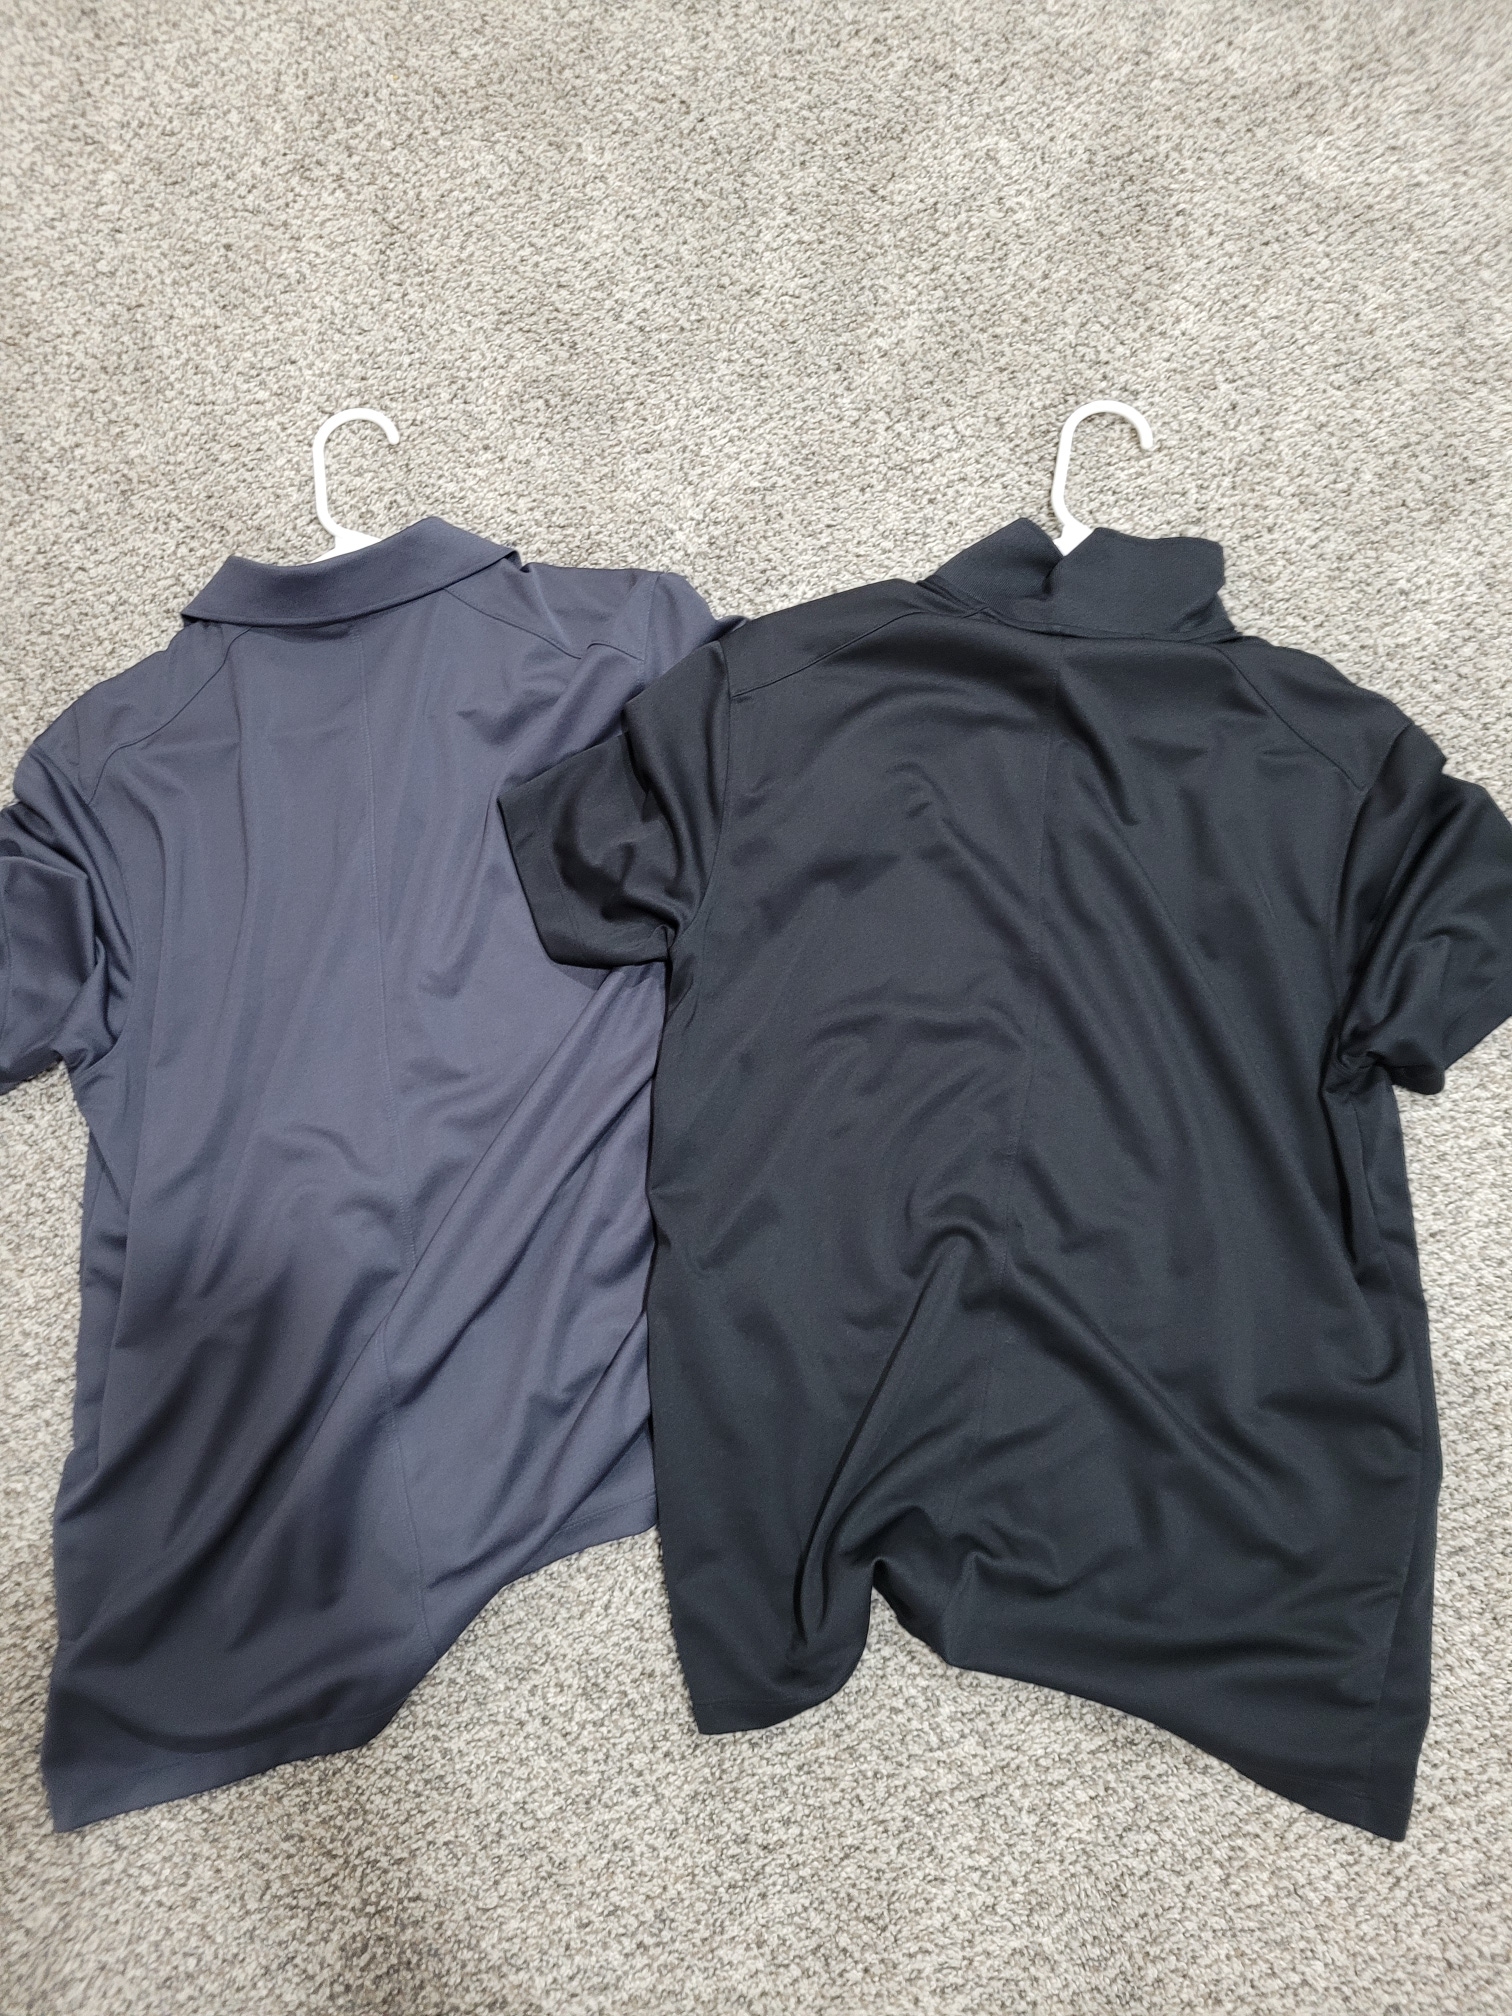 Black and Charcoal Used Medium Men's Nike Shirt